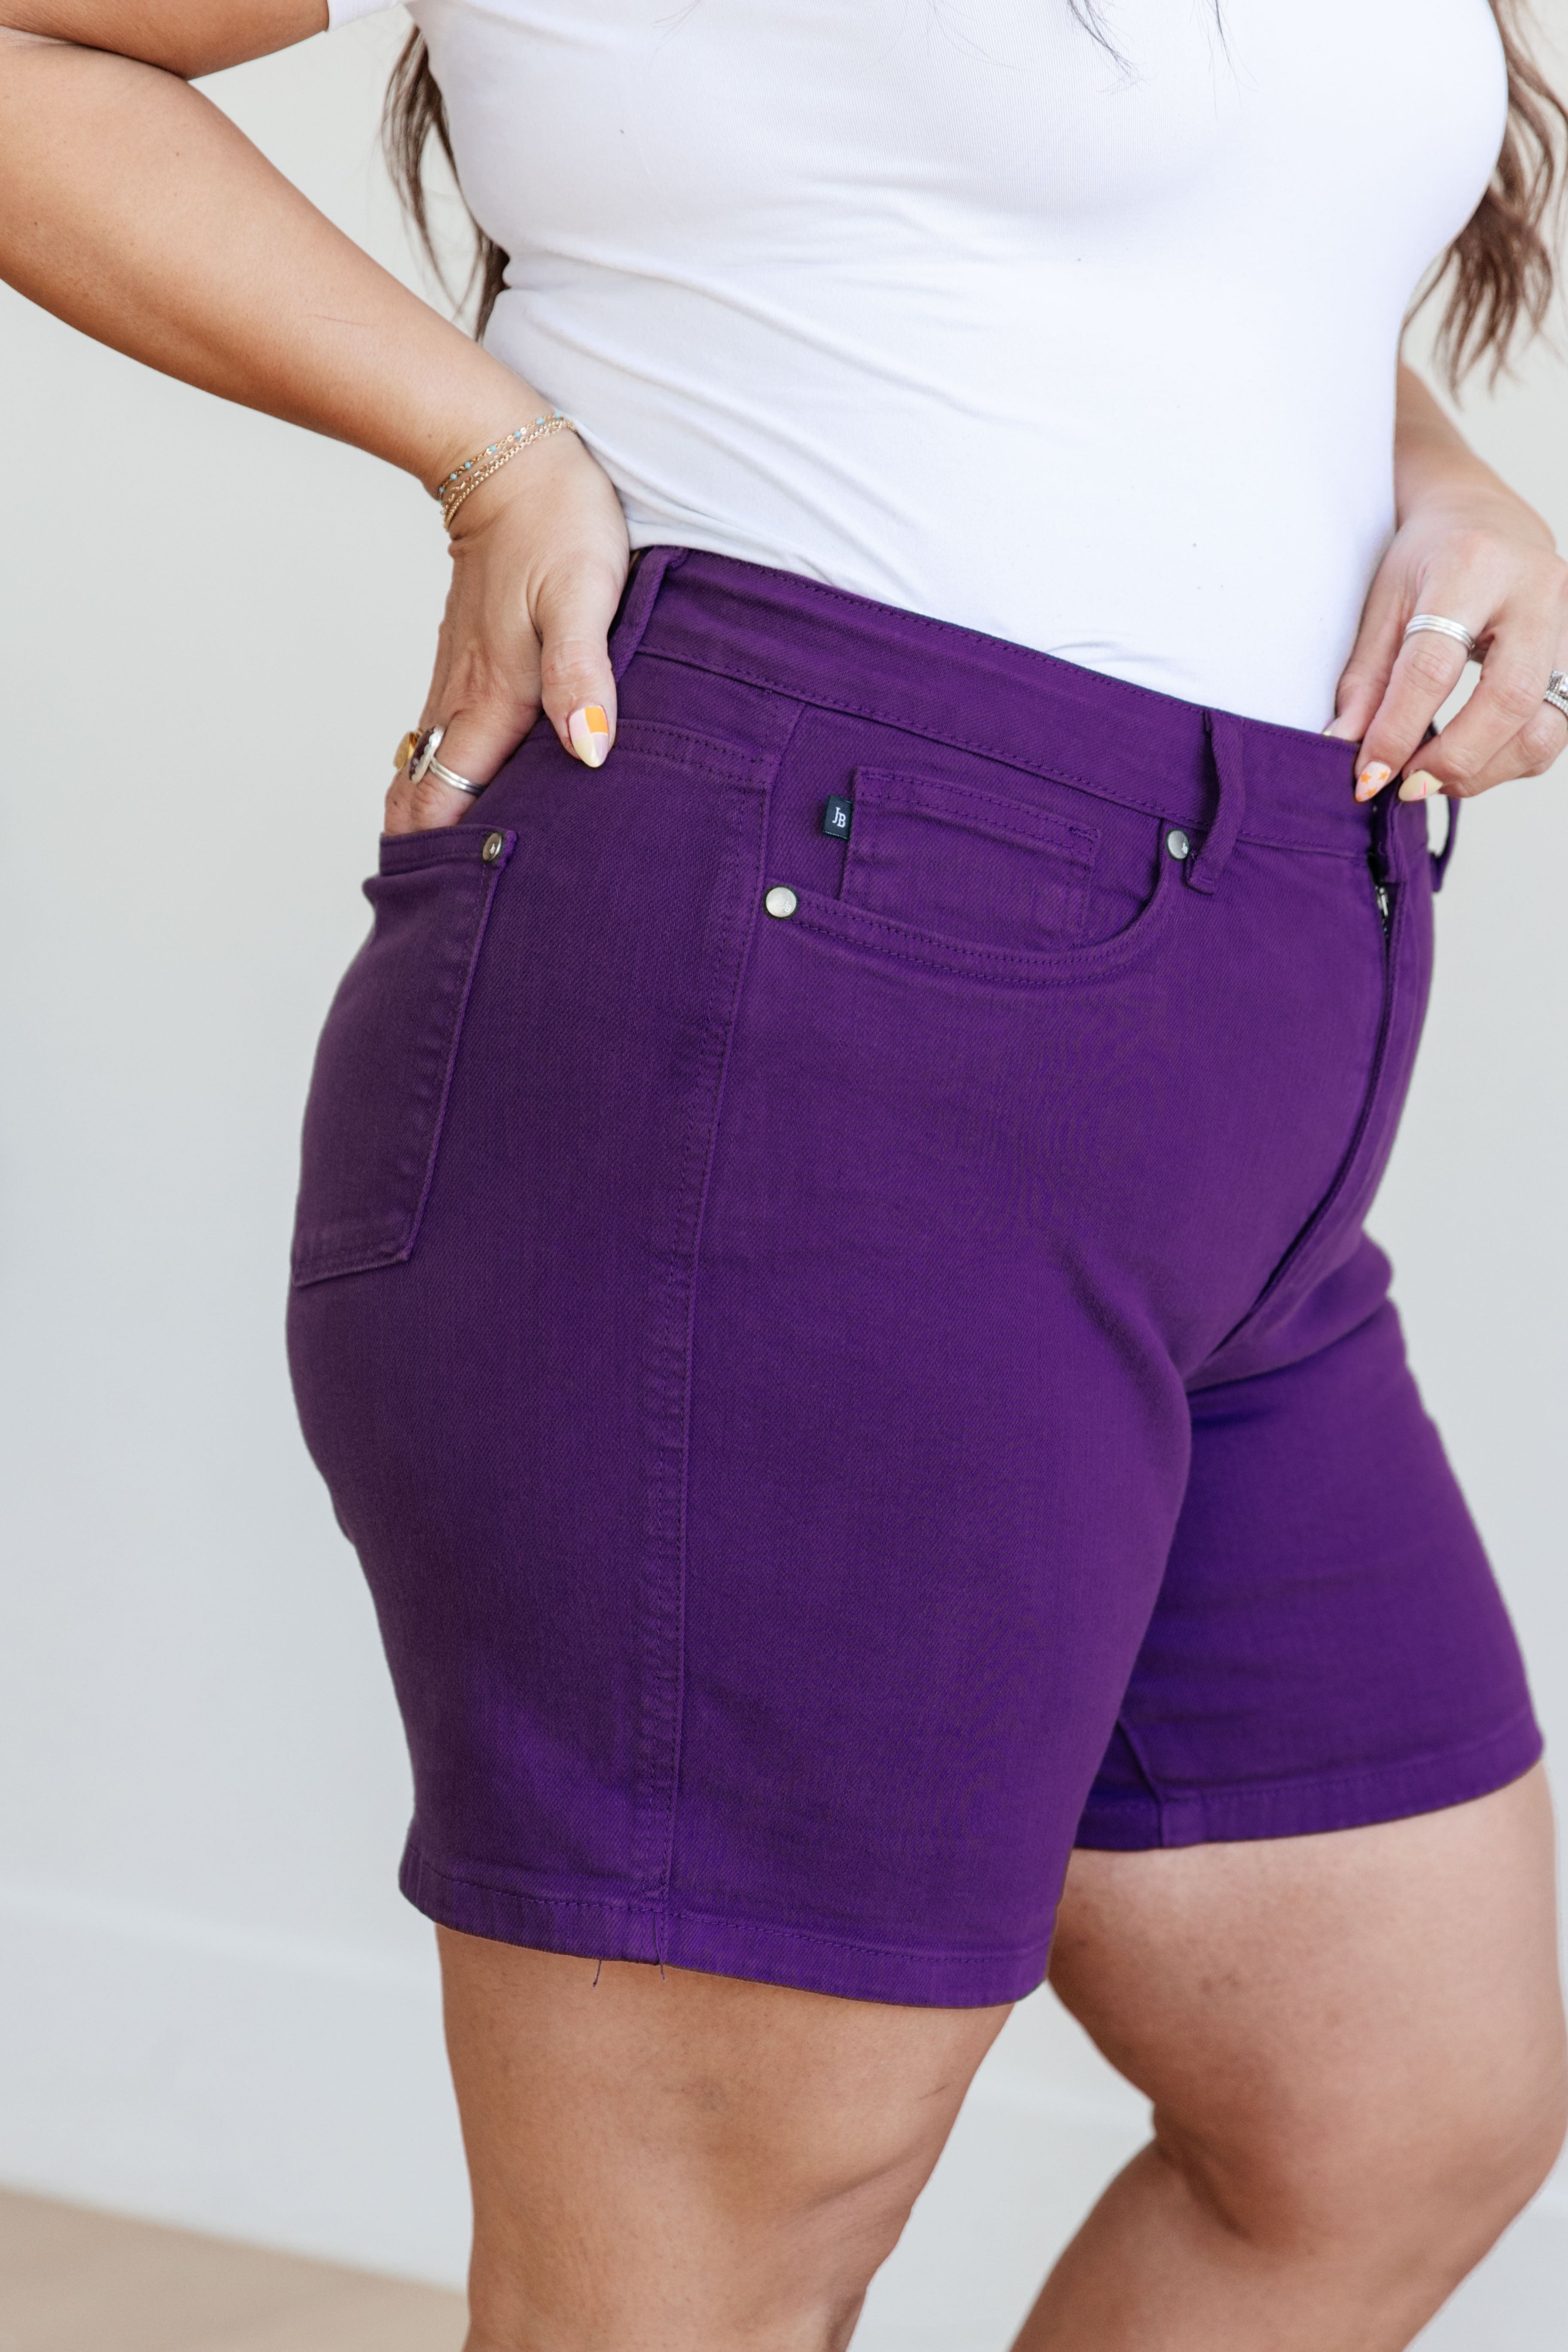 Judy Blue Tummy Control Shorts - Purple